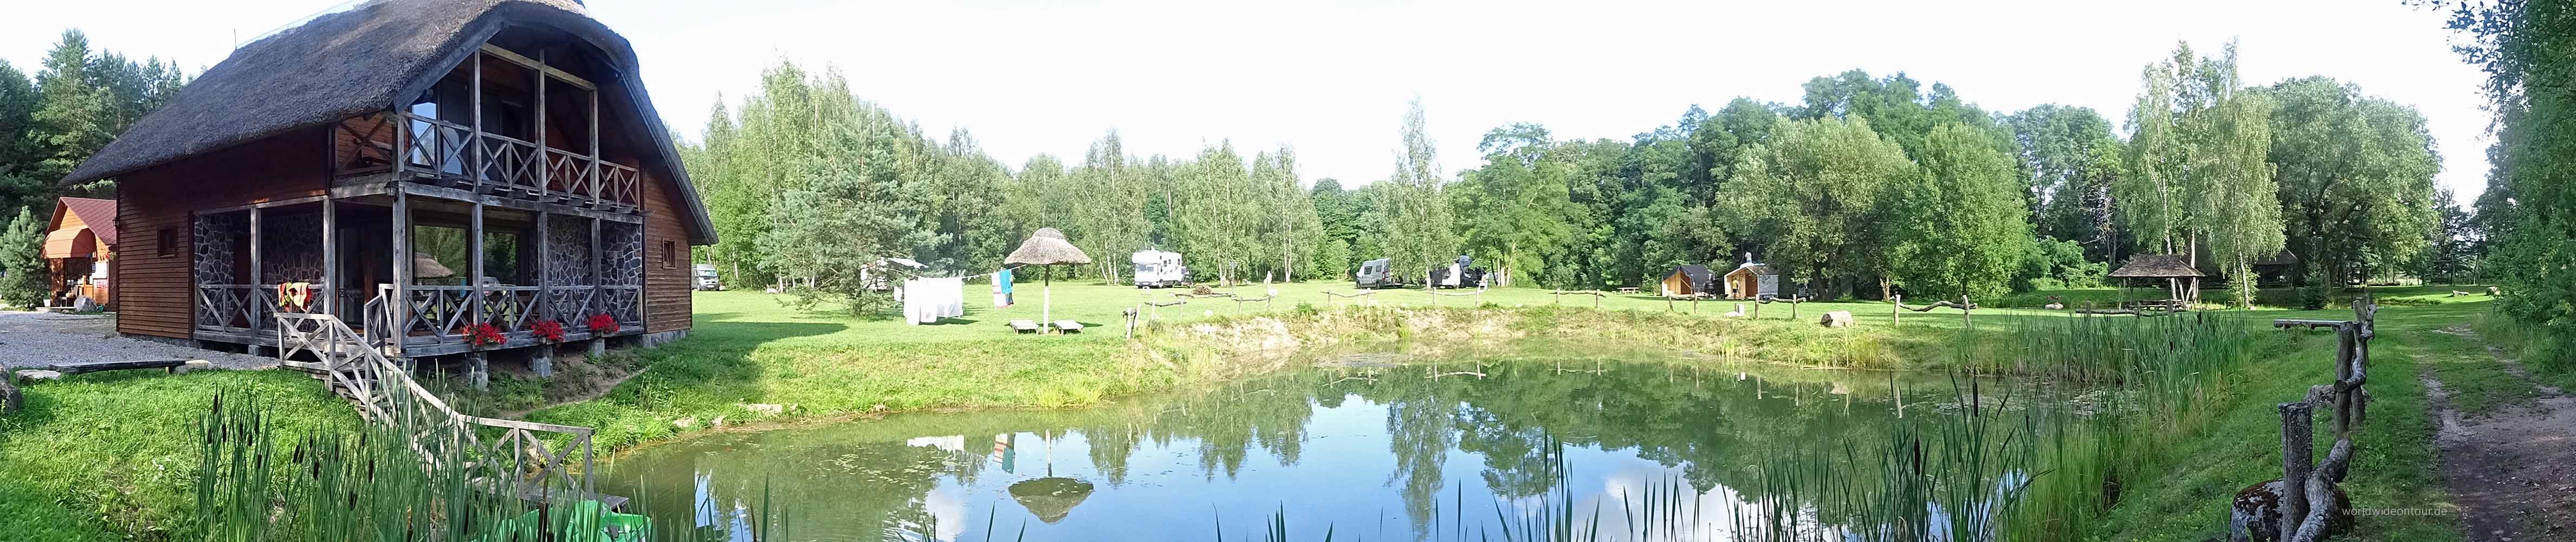 Campingplatz Medaus Slenis.